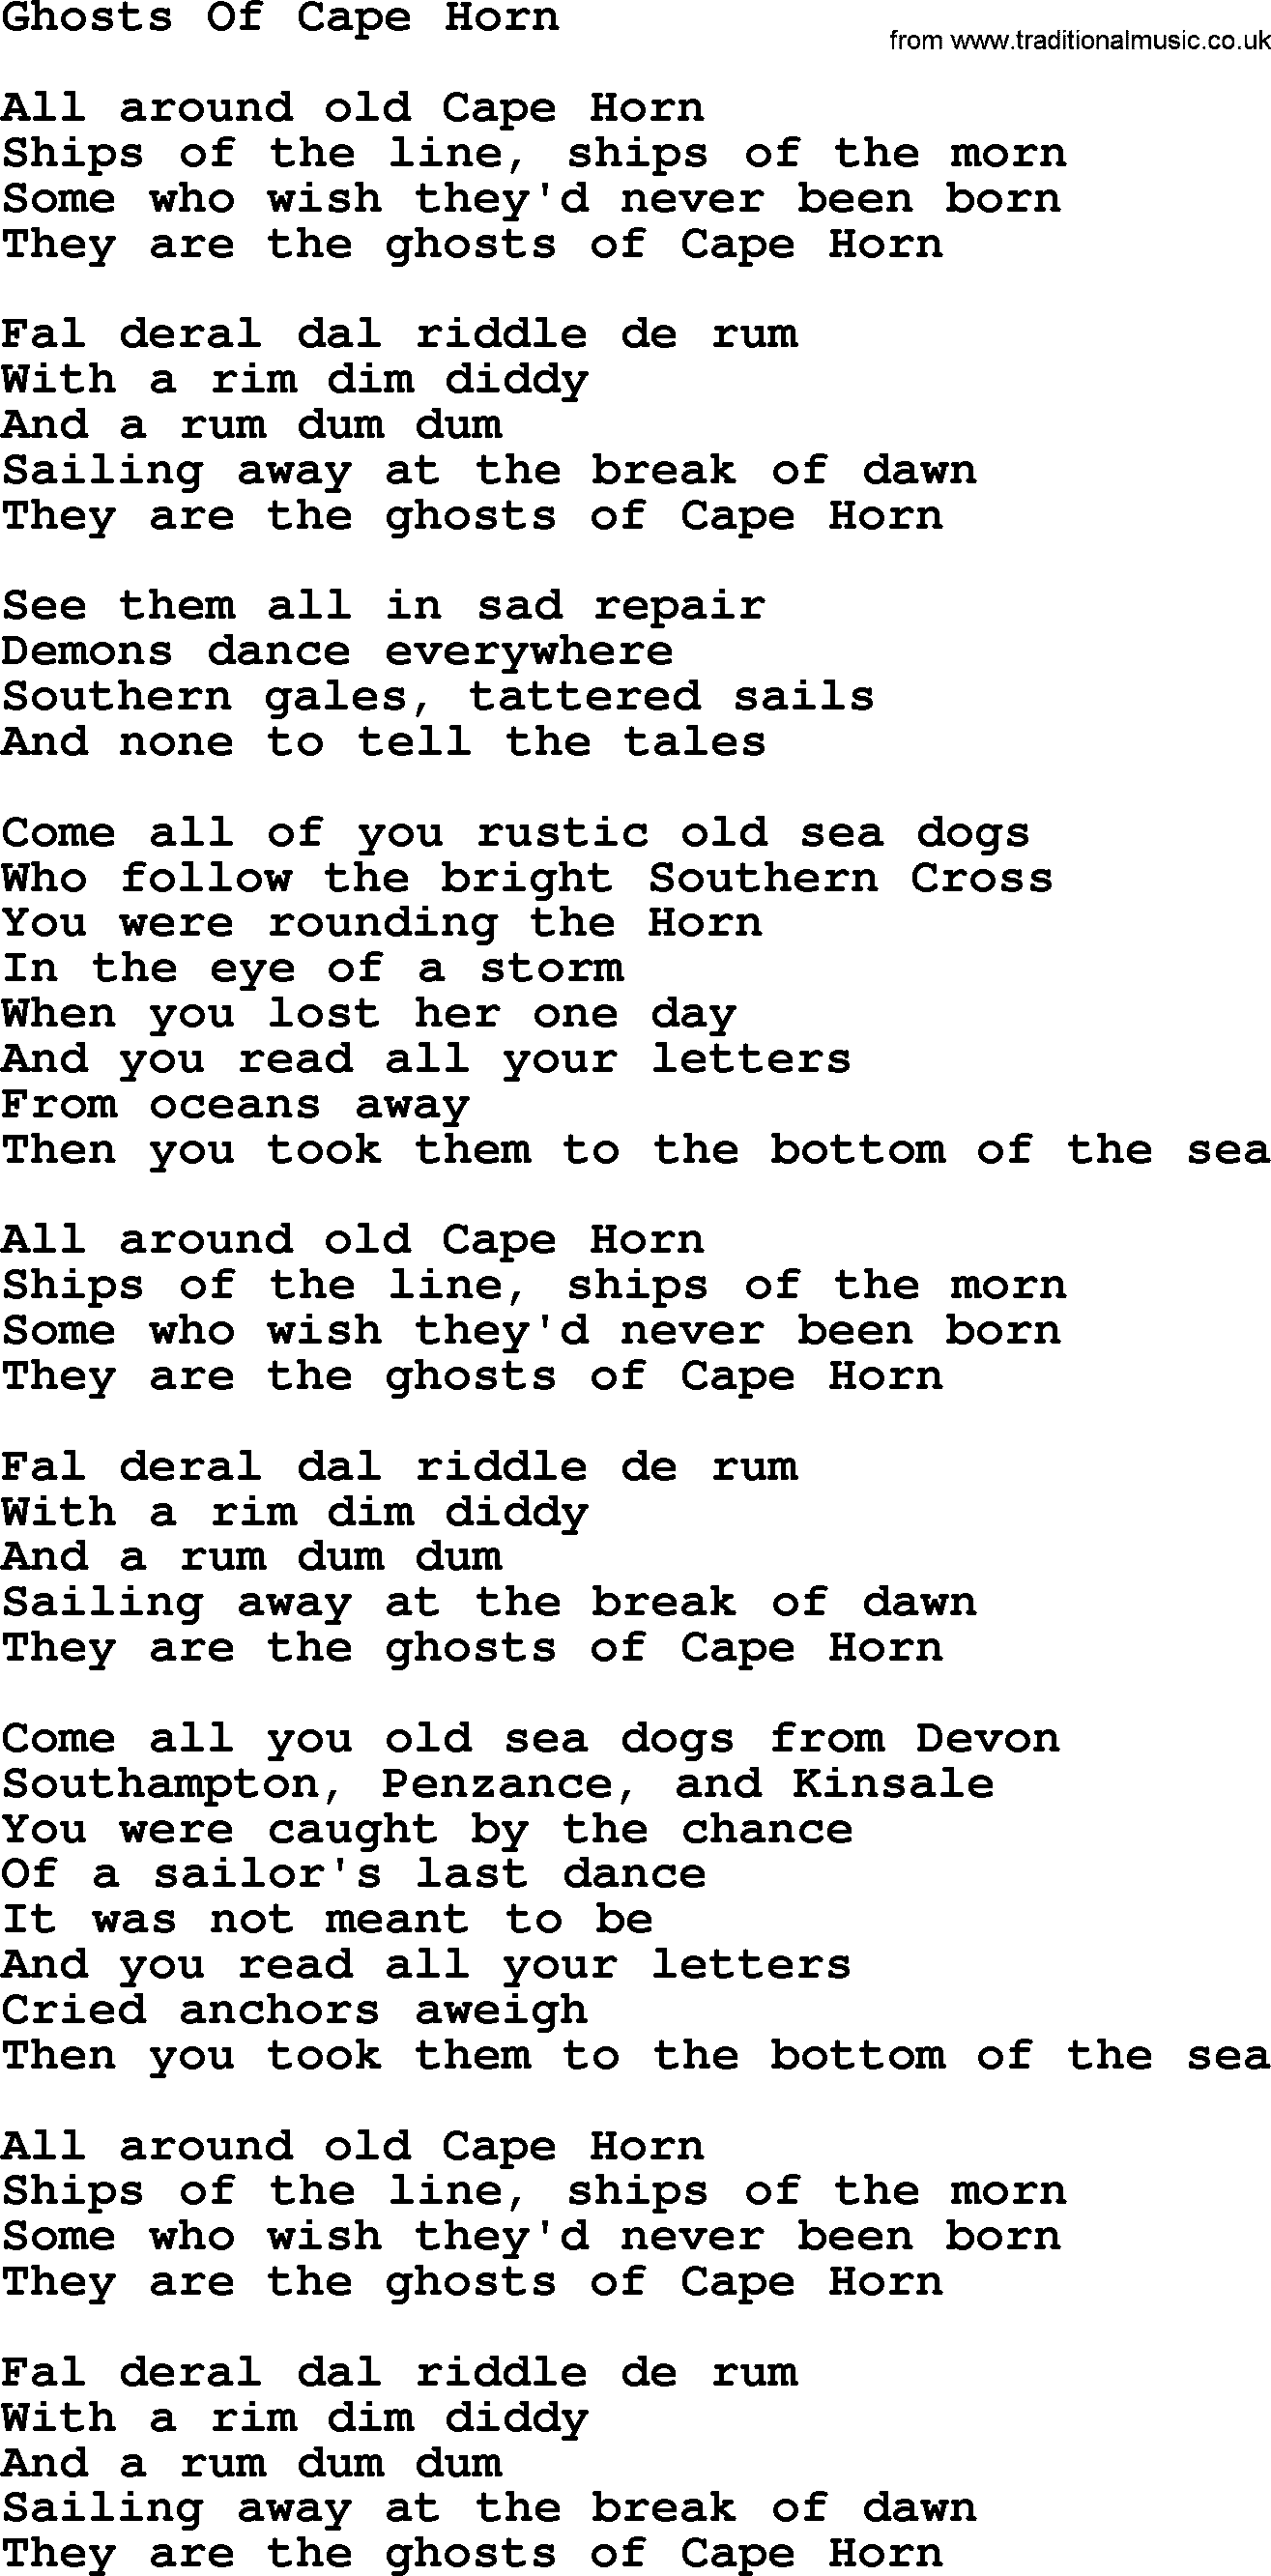 Gordon Lightfoot song Ghosts Of Cape Horn, lyrics